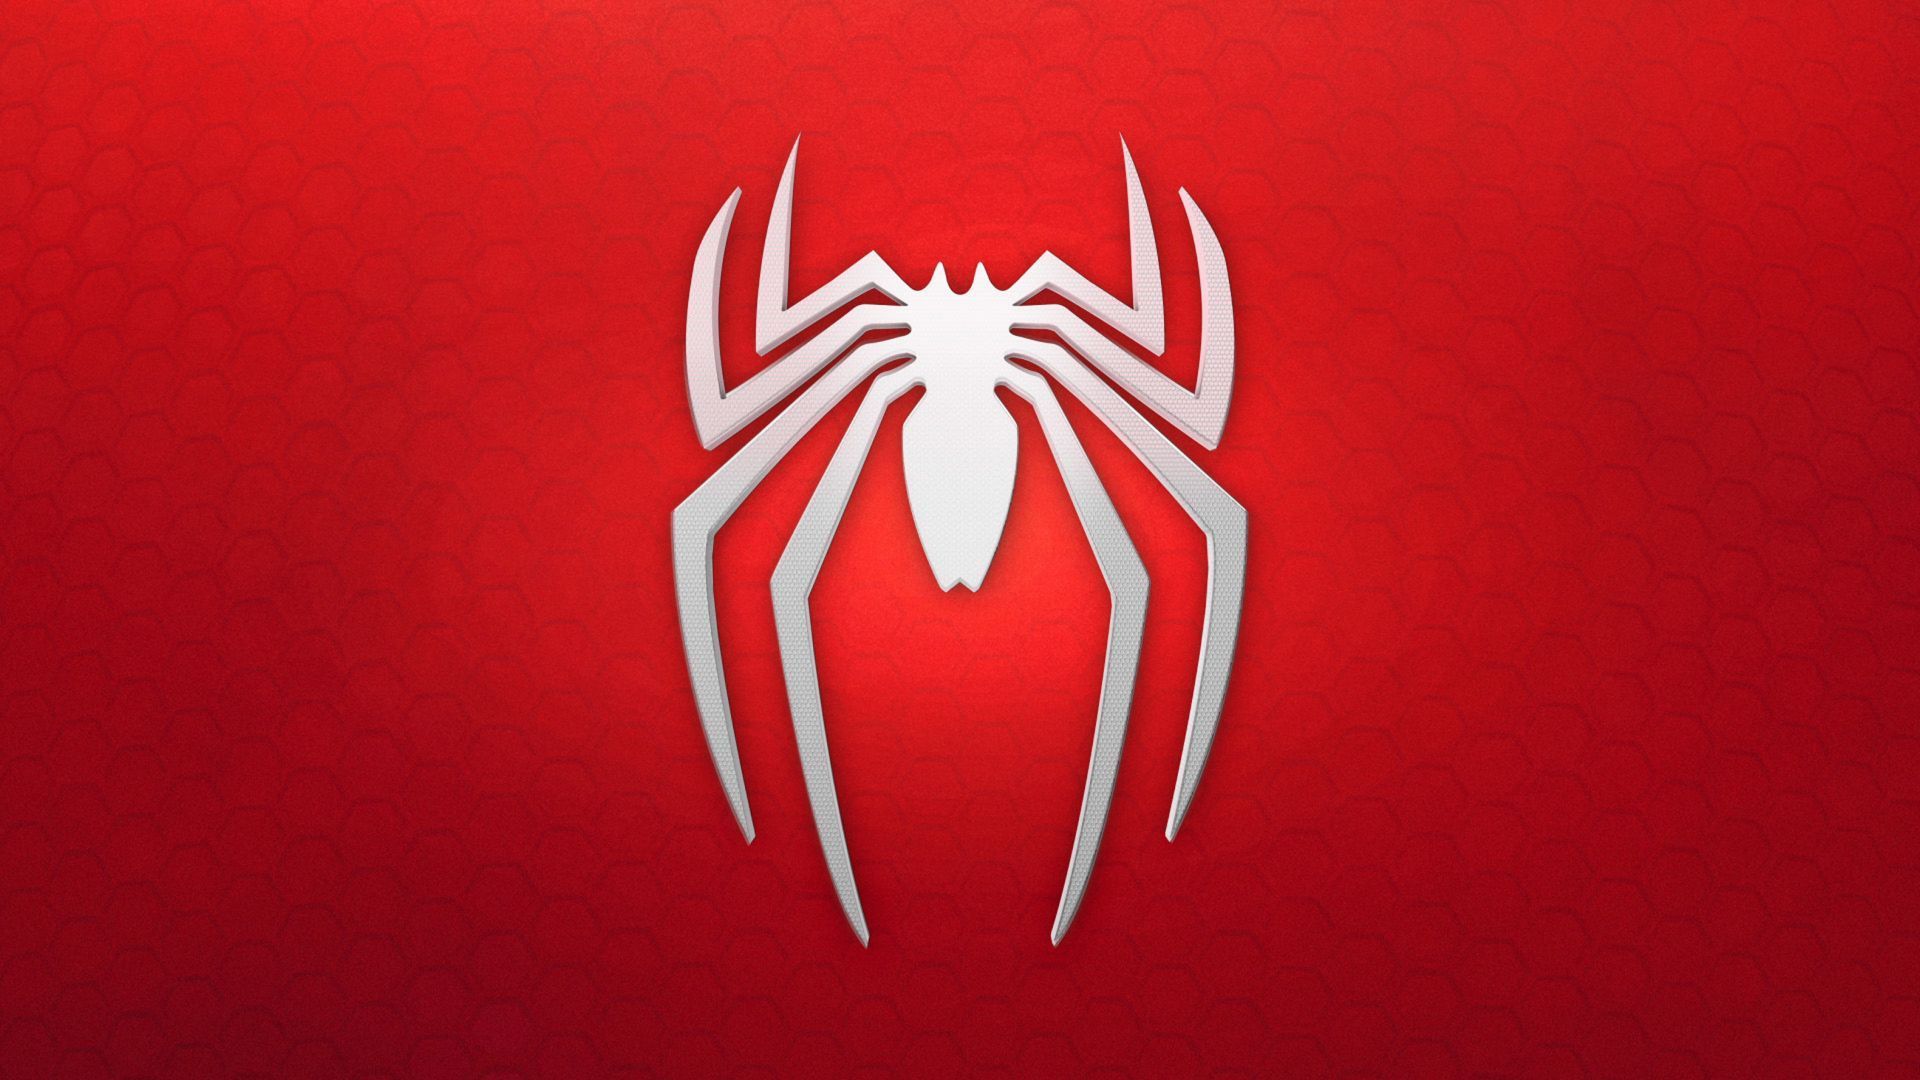 Spider Man PS4 Logo Wallpaper Free Spider Man PS4 Logo Background